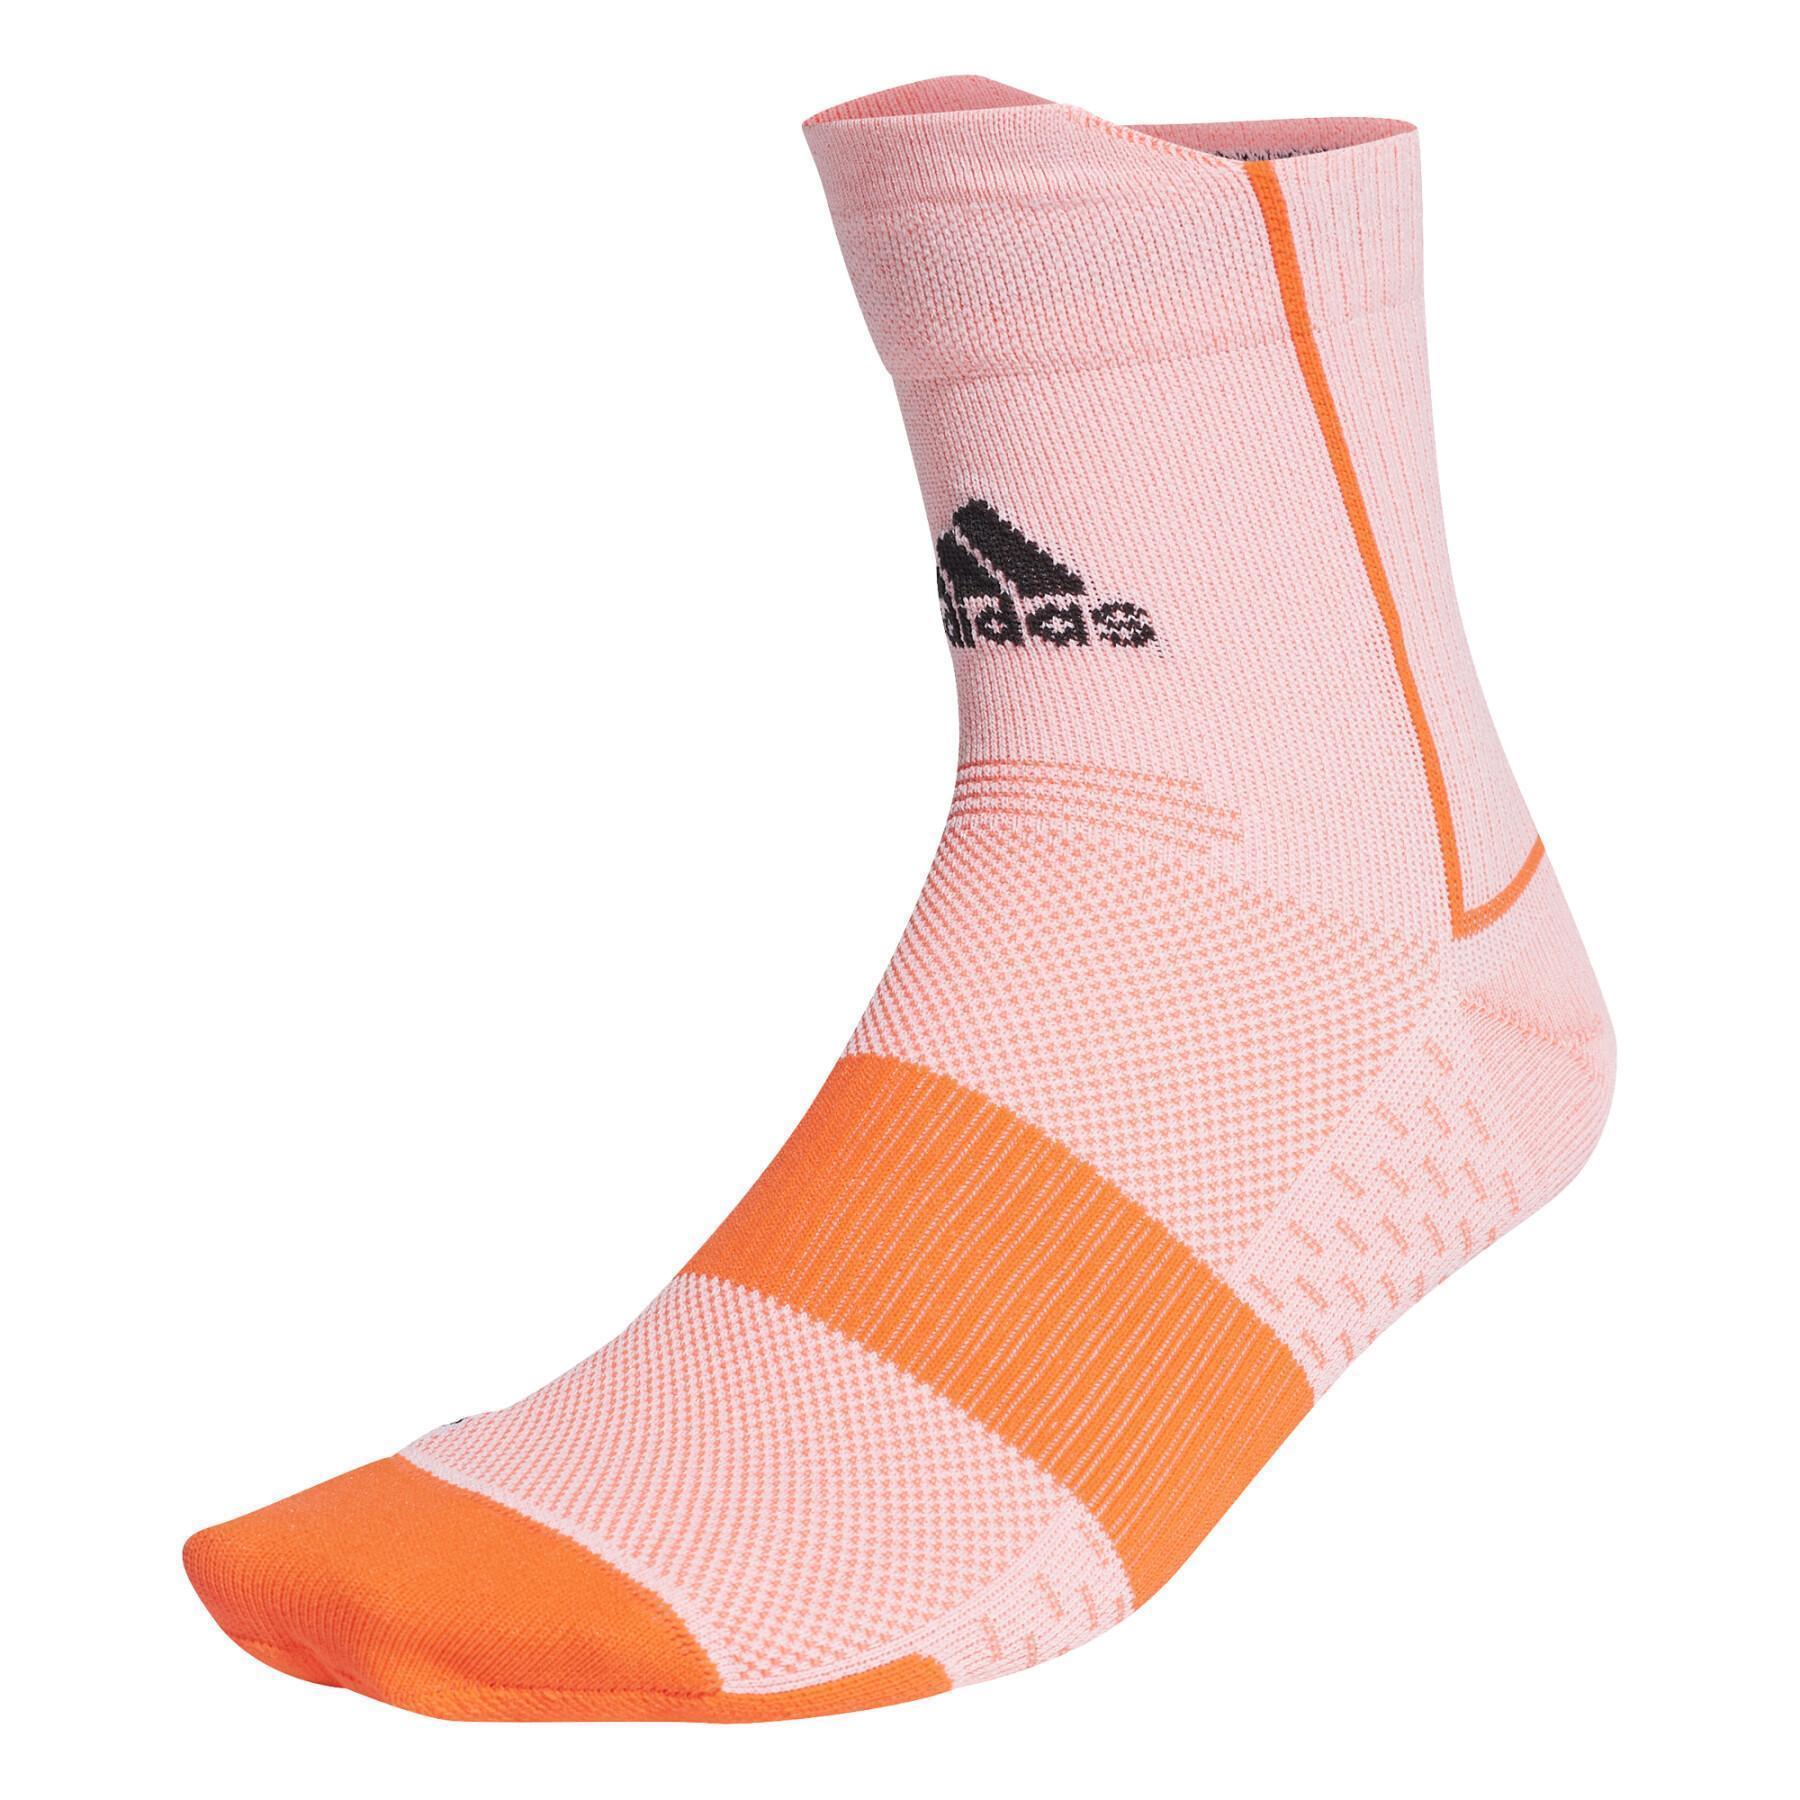 Socks adidas Running Adizero Ultralight Quarter Performance